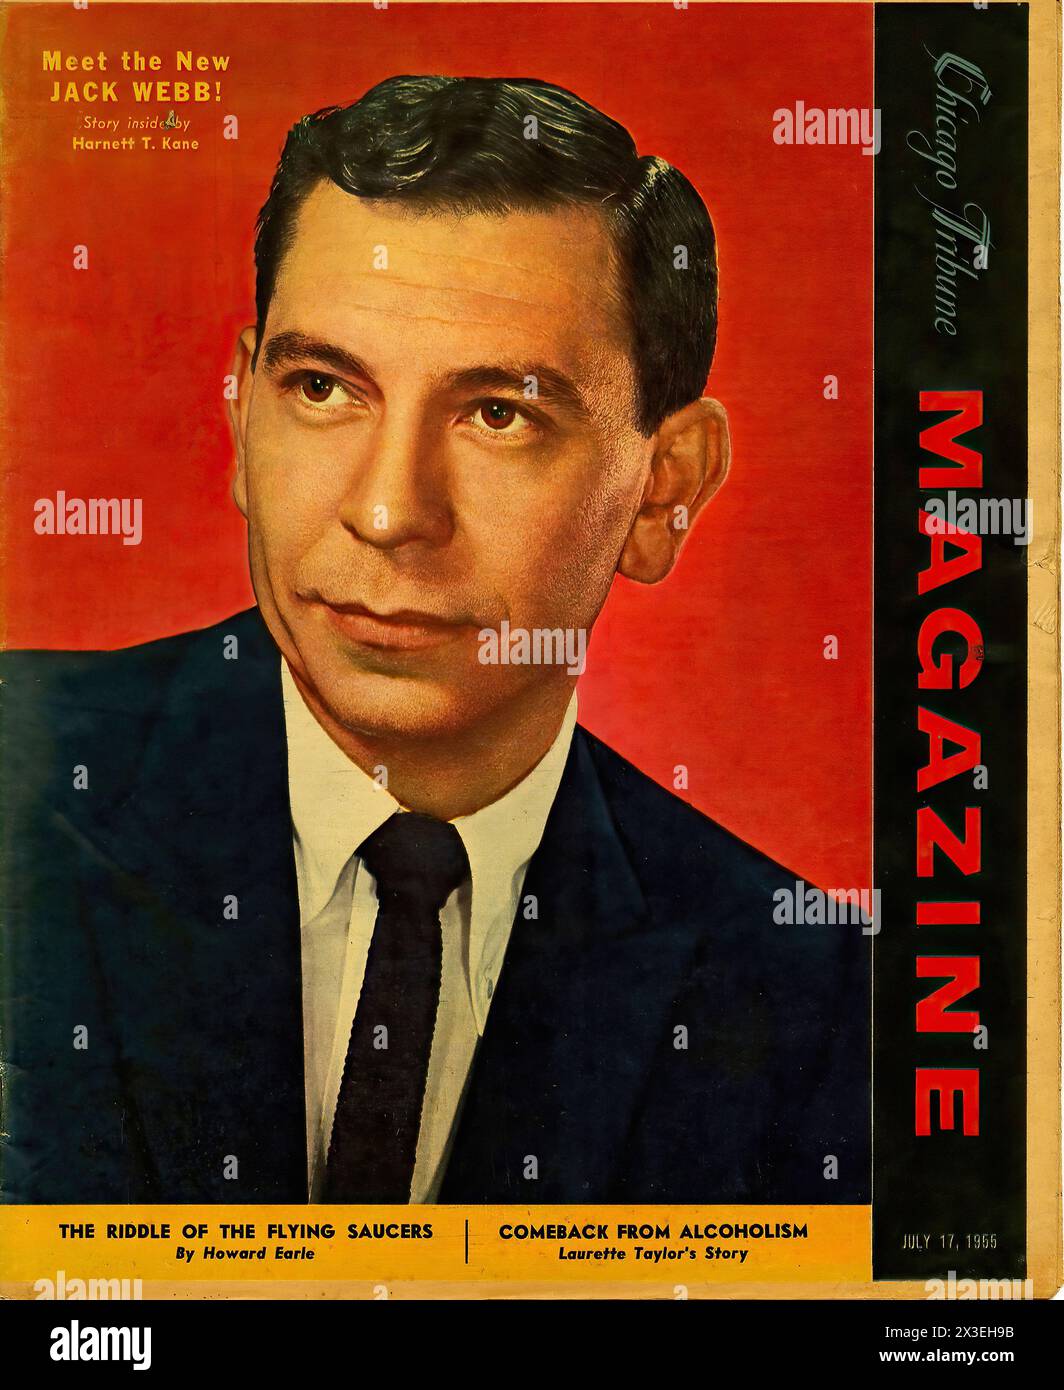 Meet the New Jack Webb! - Vintage american magazine cover Stock Photo